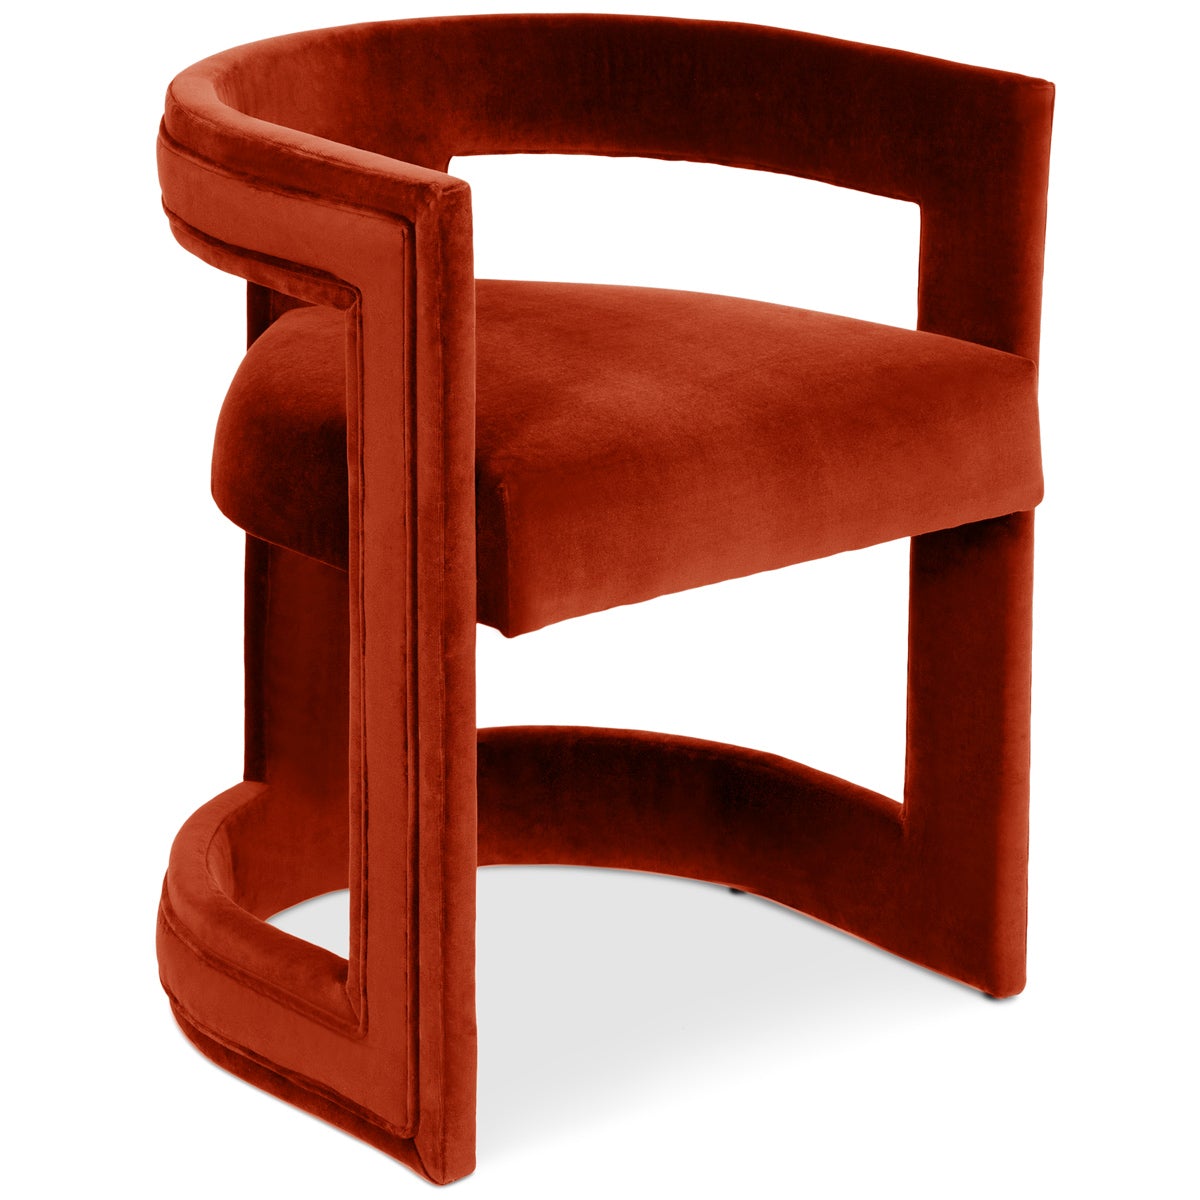 Positano Dining Chair - ModShop1.com